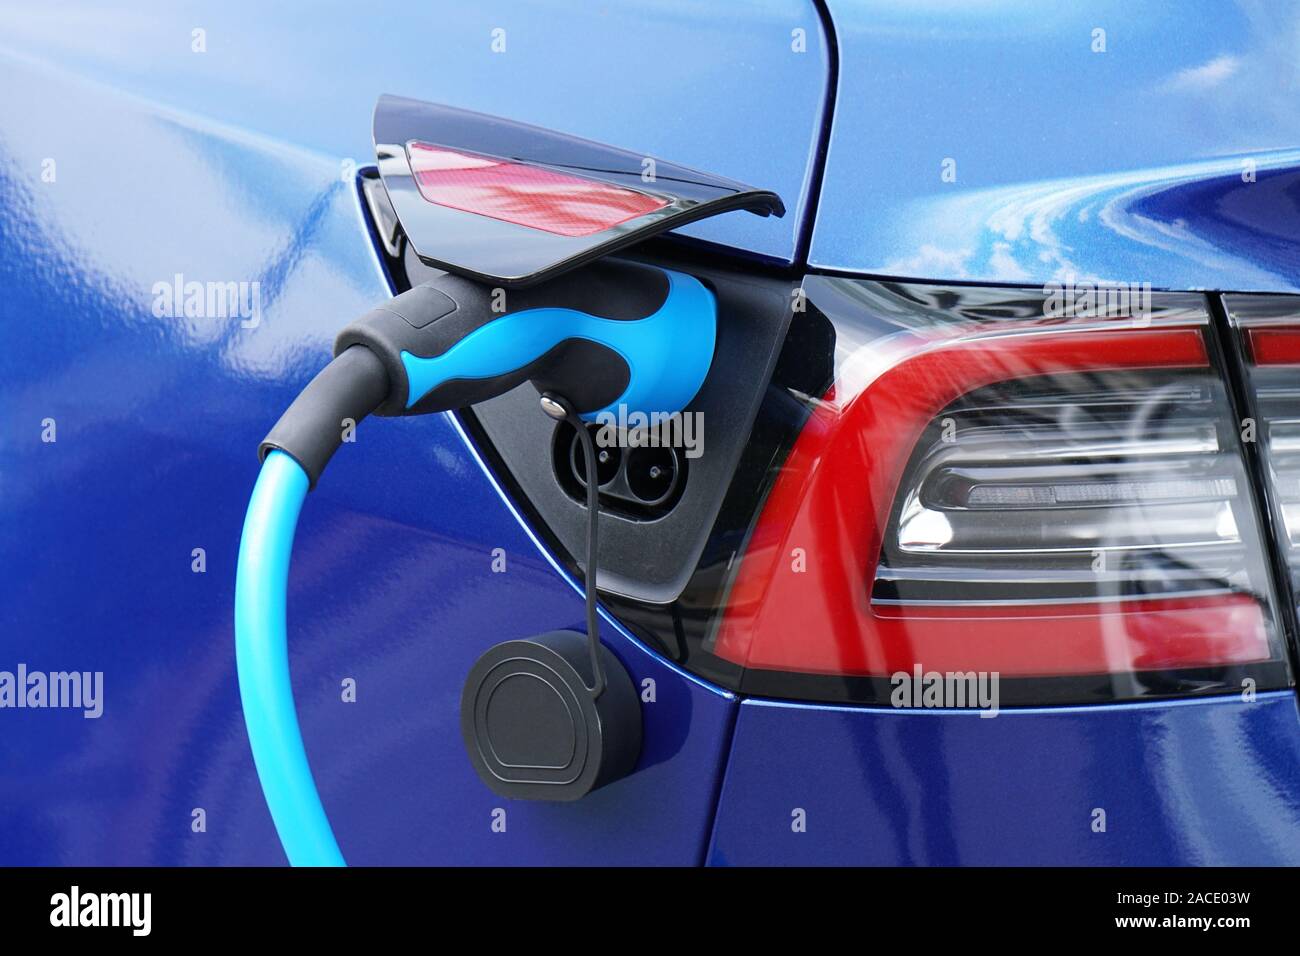 EV oder Elektroauto an der Ladestation mit Plug-in-Spannungsversorgung Kabel - e-mobility concept Stockfoto